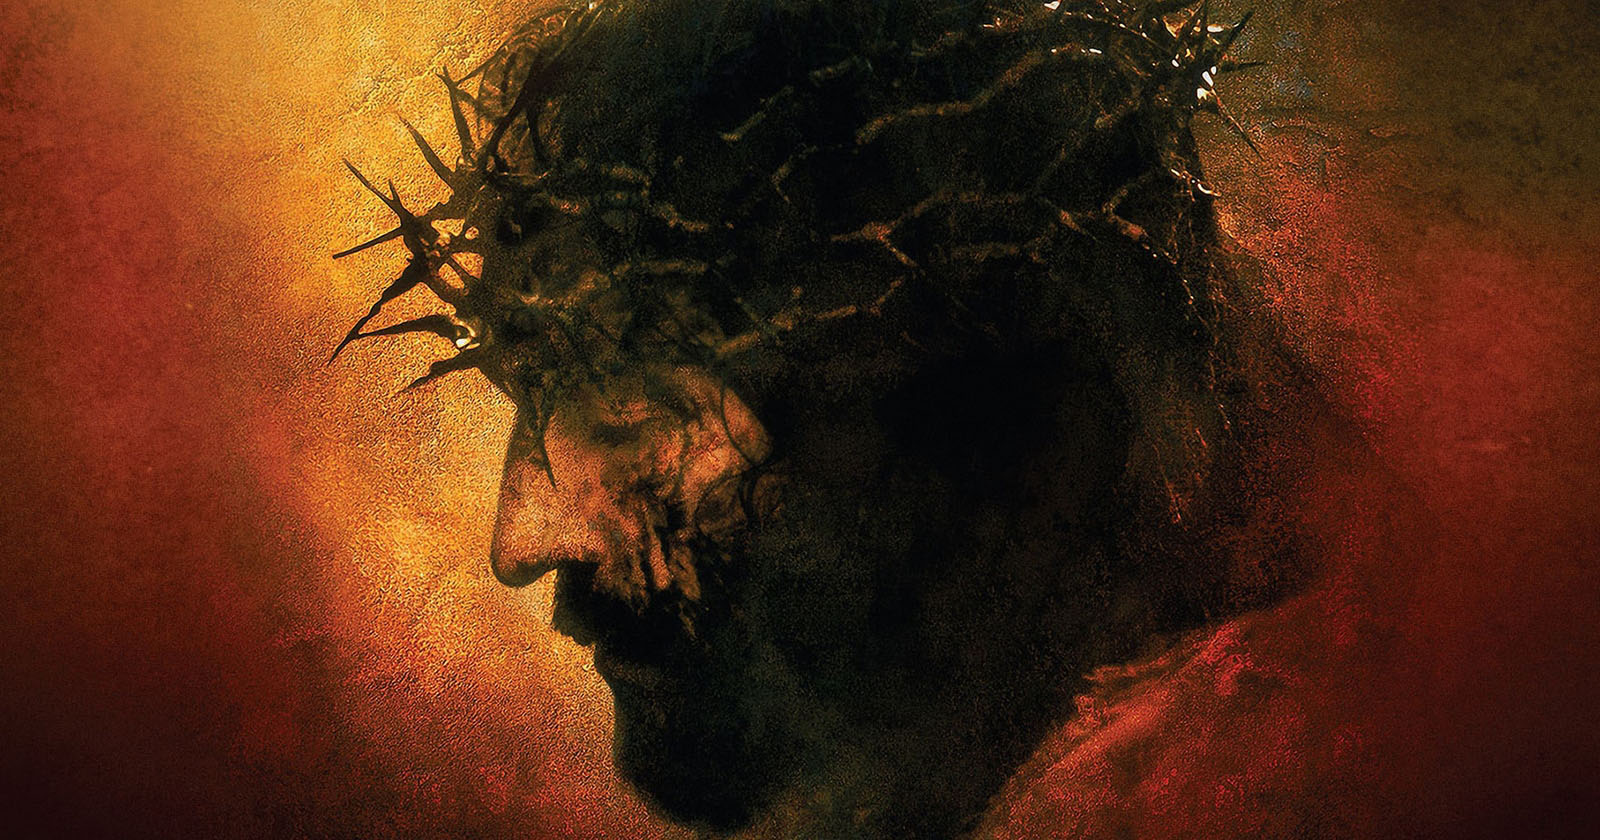 Страсти Христовы (2004) - The Passion of the Christ